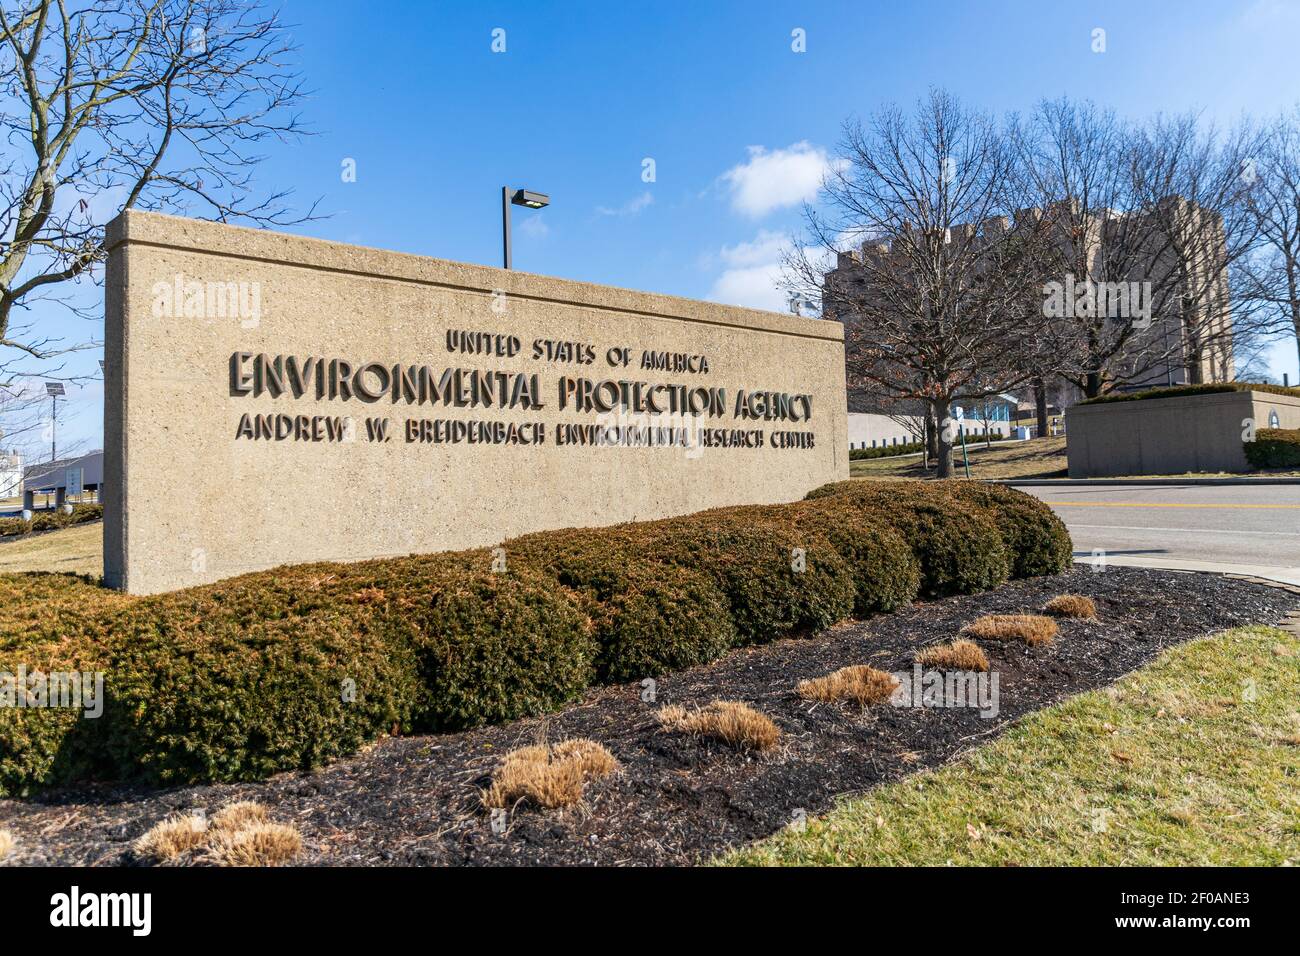 Cincinnati, OH - February 27, 2021: United States Environmental Protection Agency Andrew W. Breidenbach Environmental Research Center Stock Photo